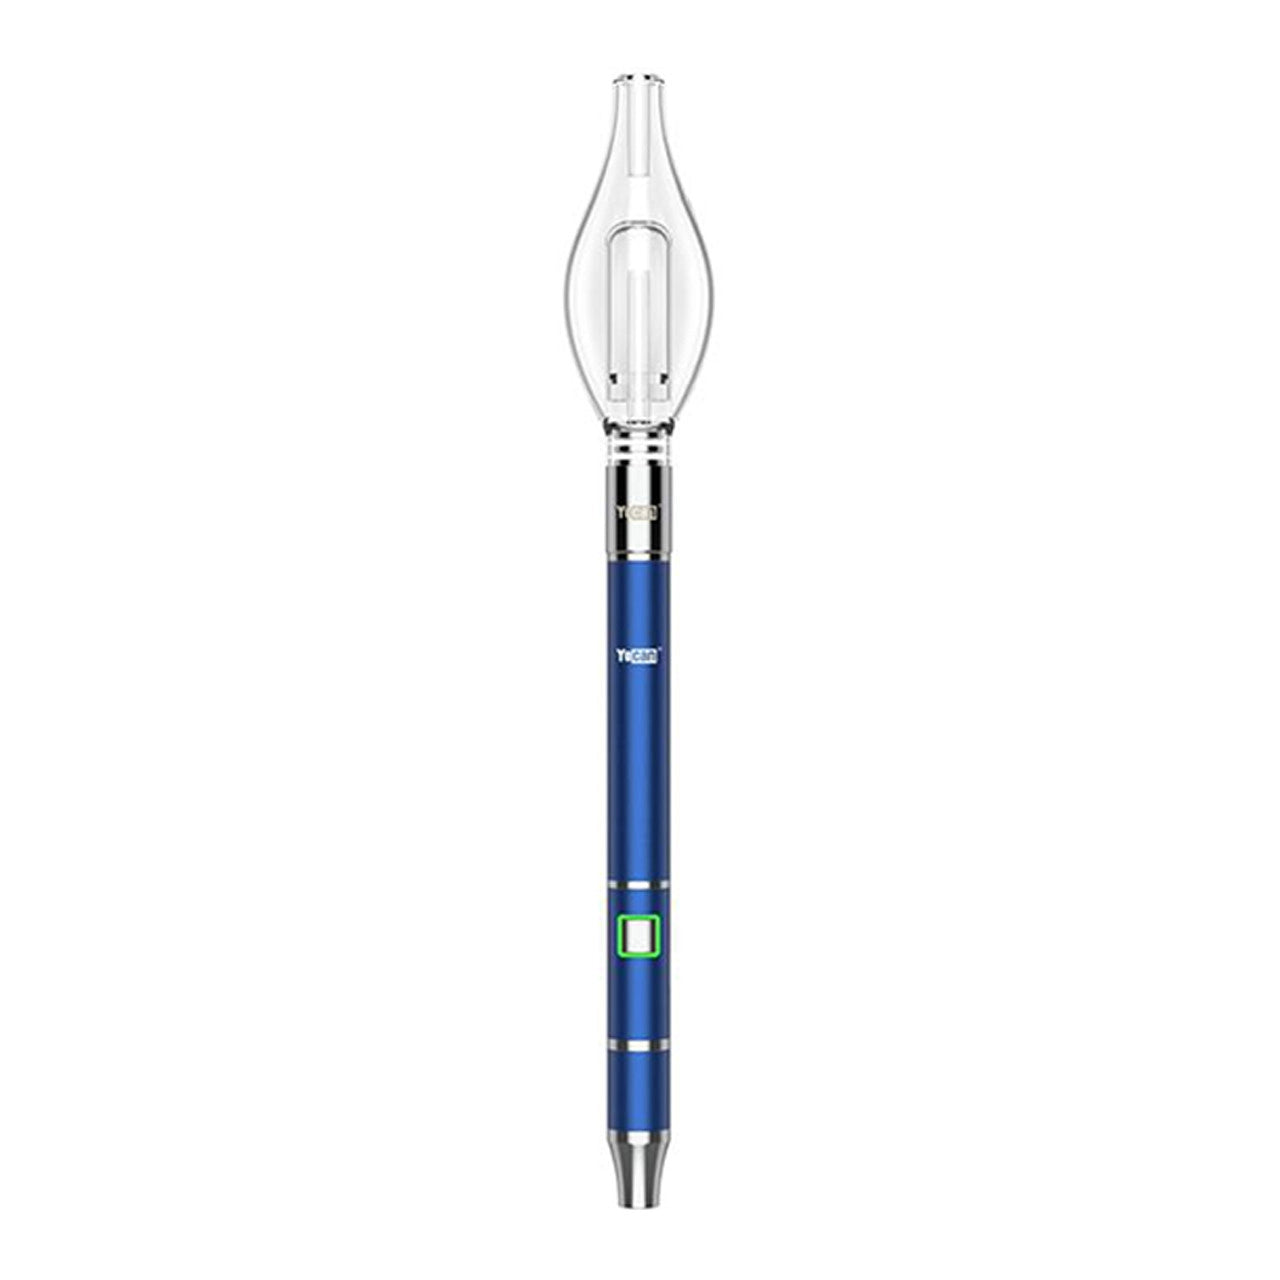 Yocan - Dive Mini 400mAh Electronic Nectar Collector Pen - Blue